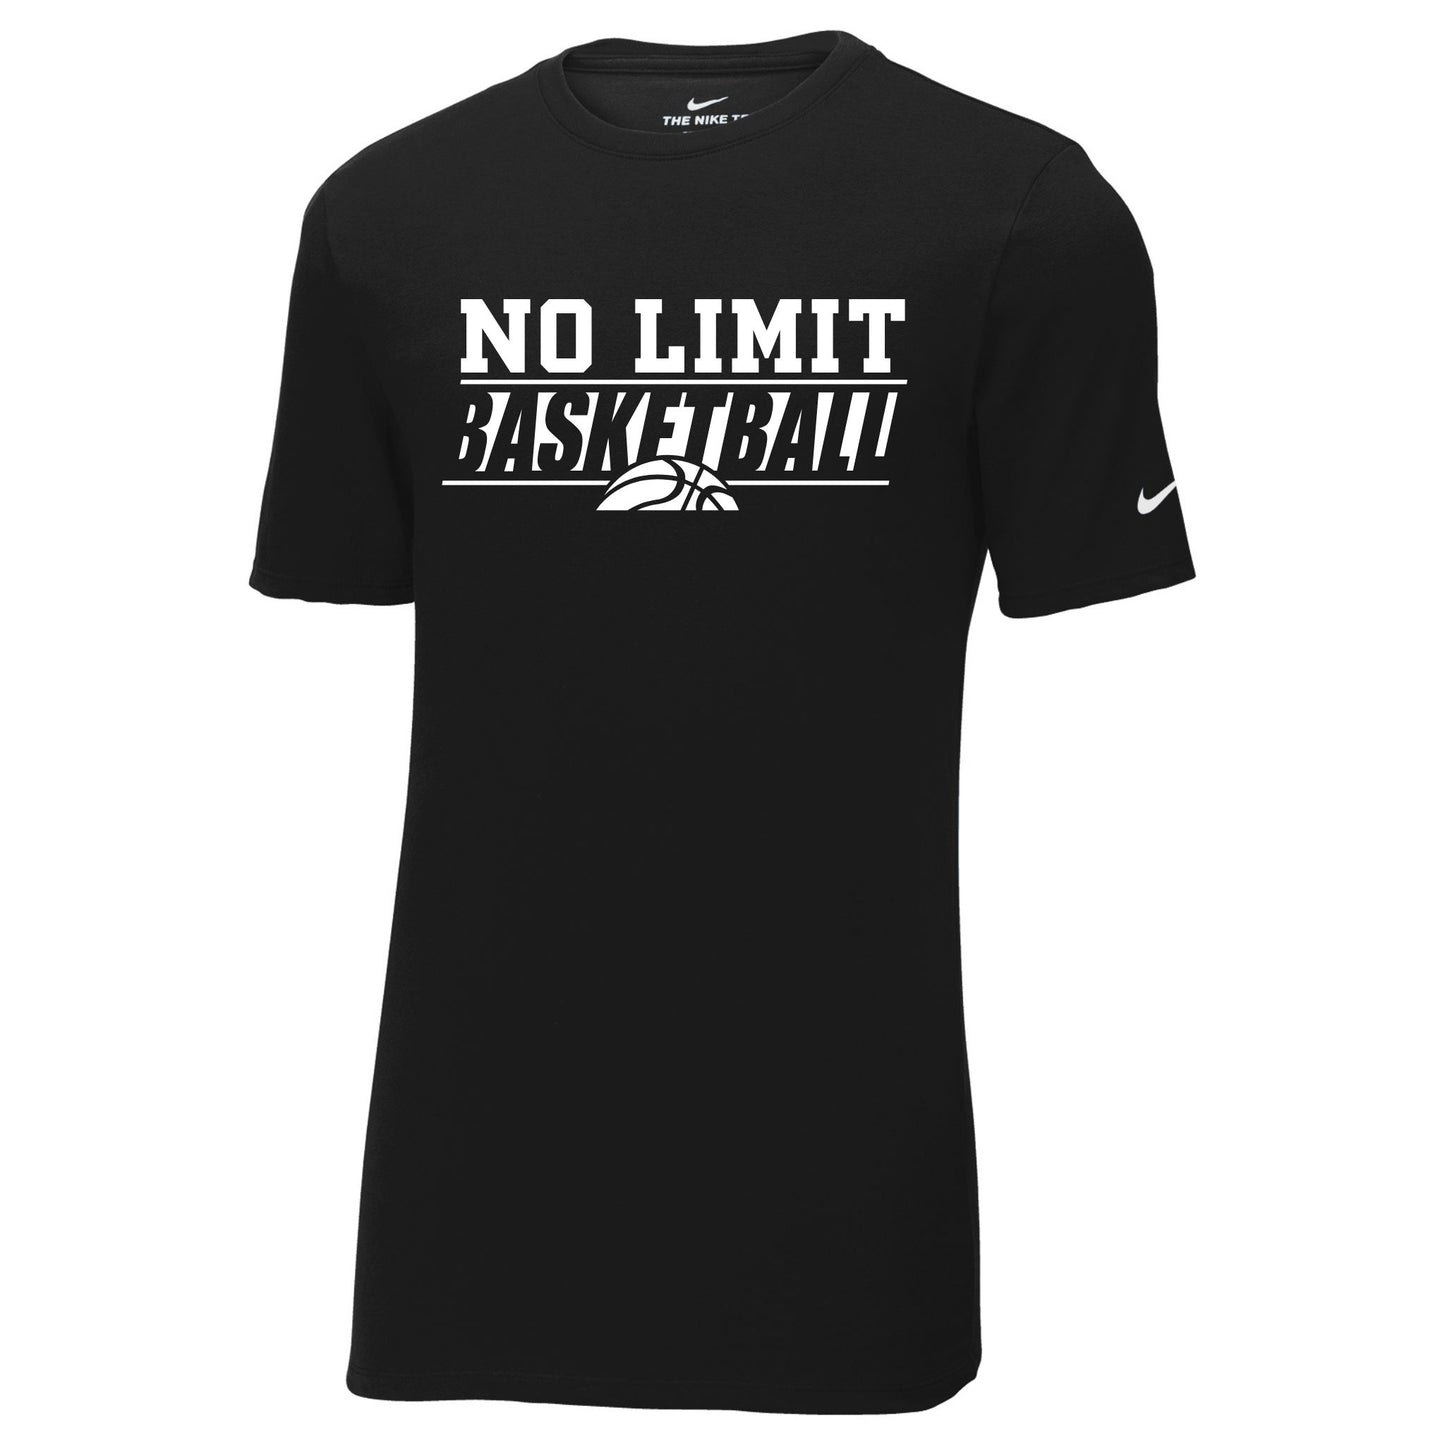 No Limit Basketball Design 1 - Nike Men's Cotton/Poly Tee